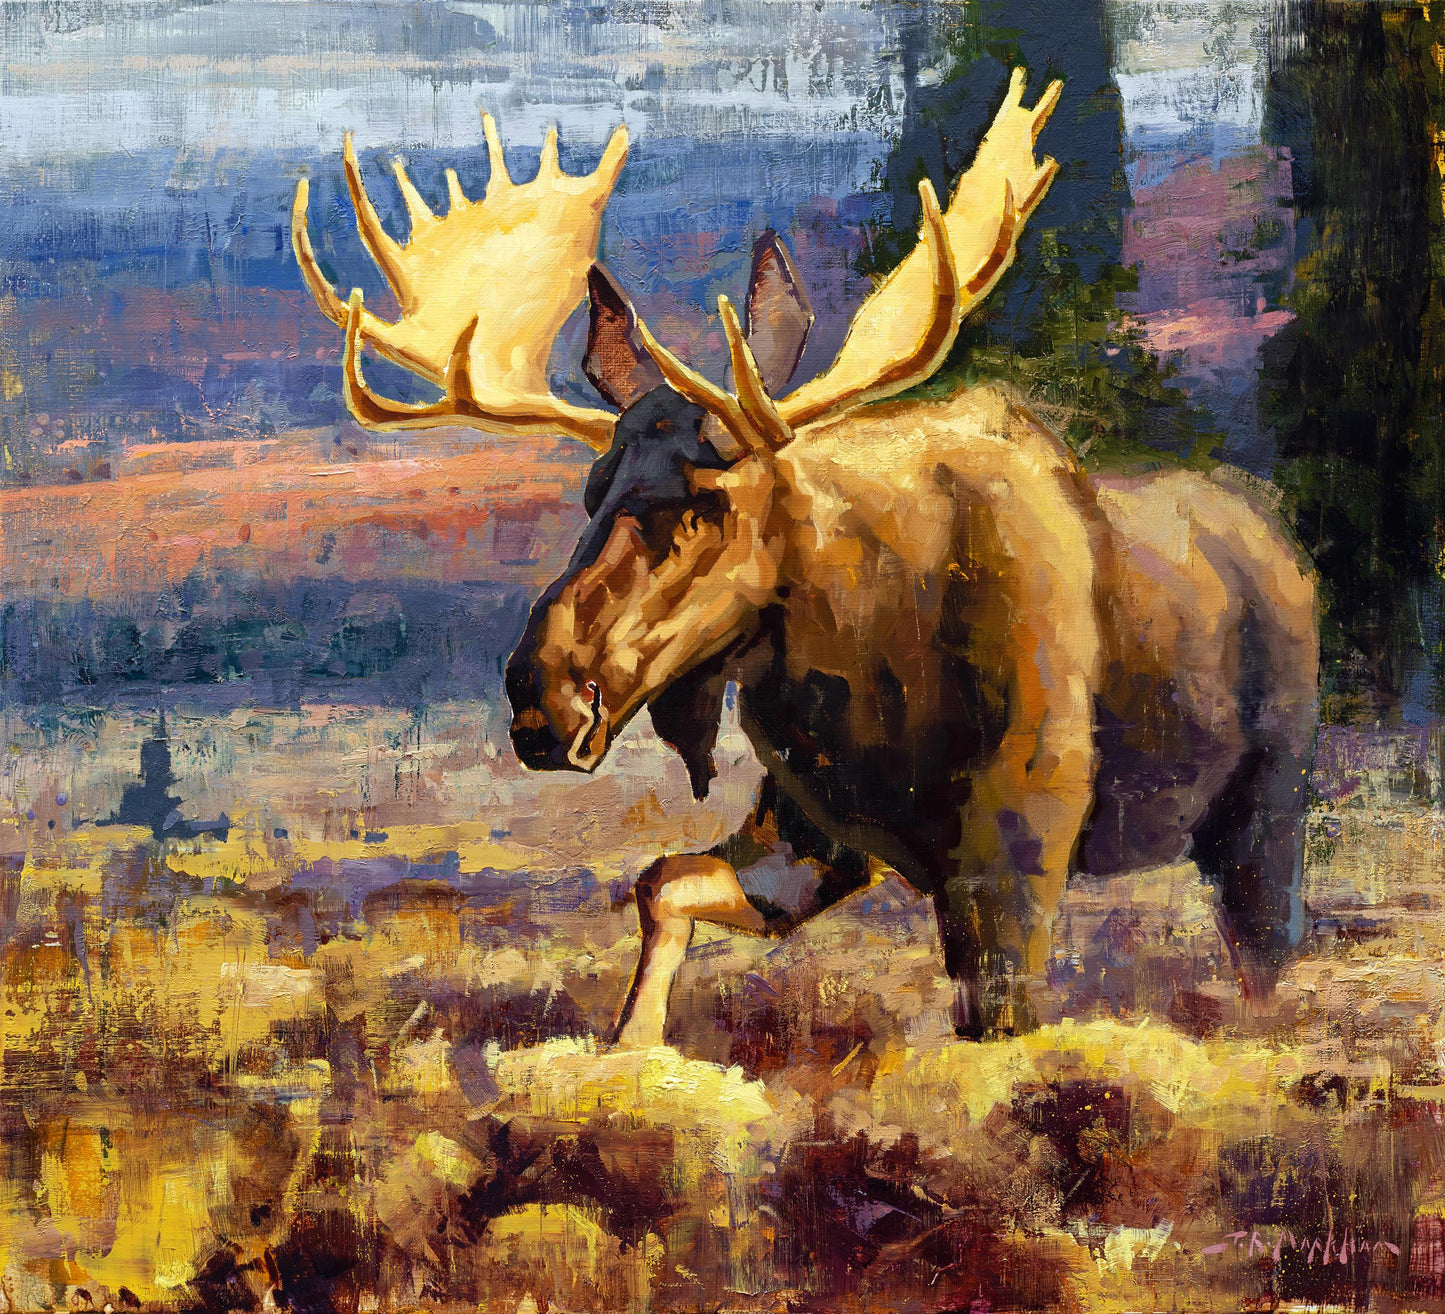 Autumn Moose-Painting-Jerry Markham-Sorrel Sky Gallery